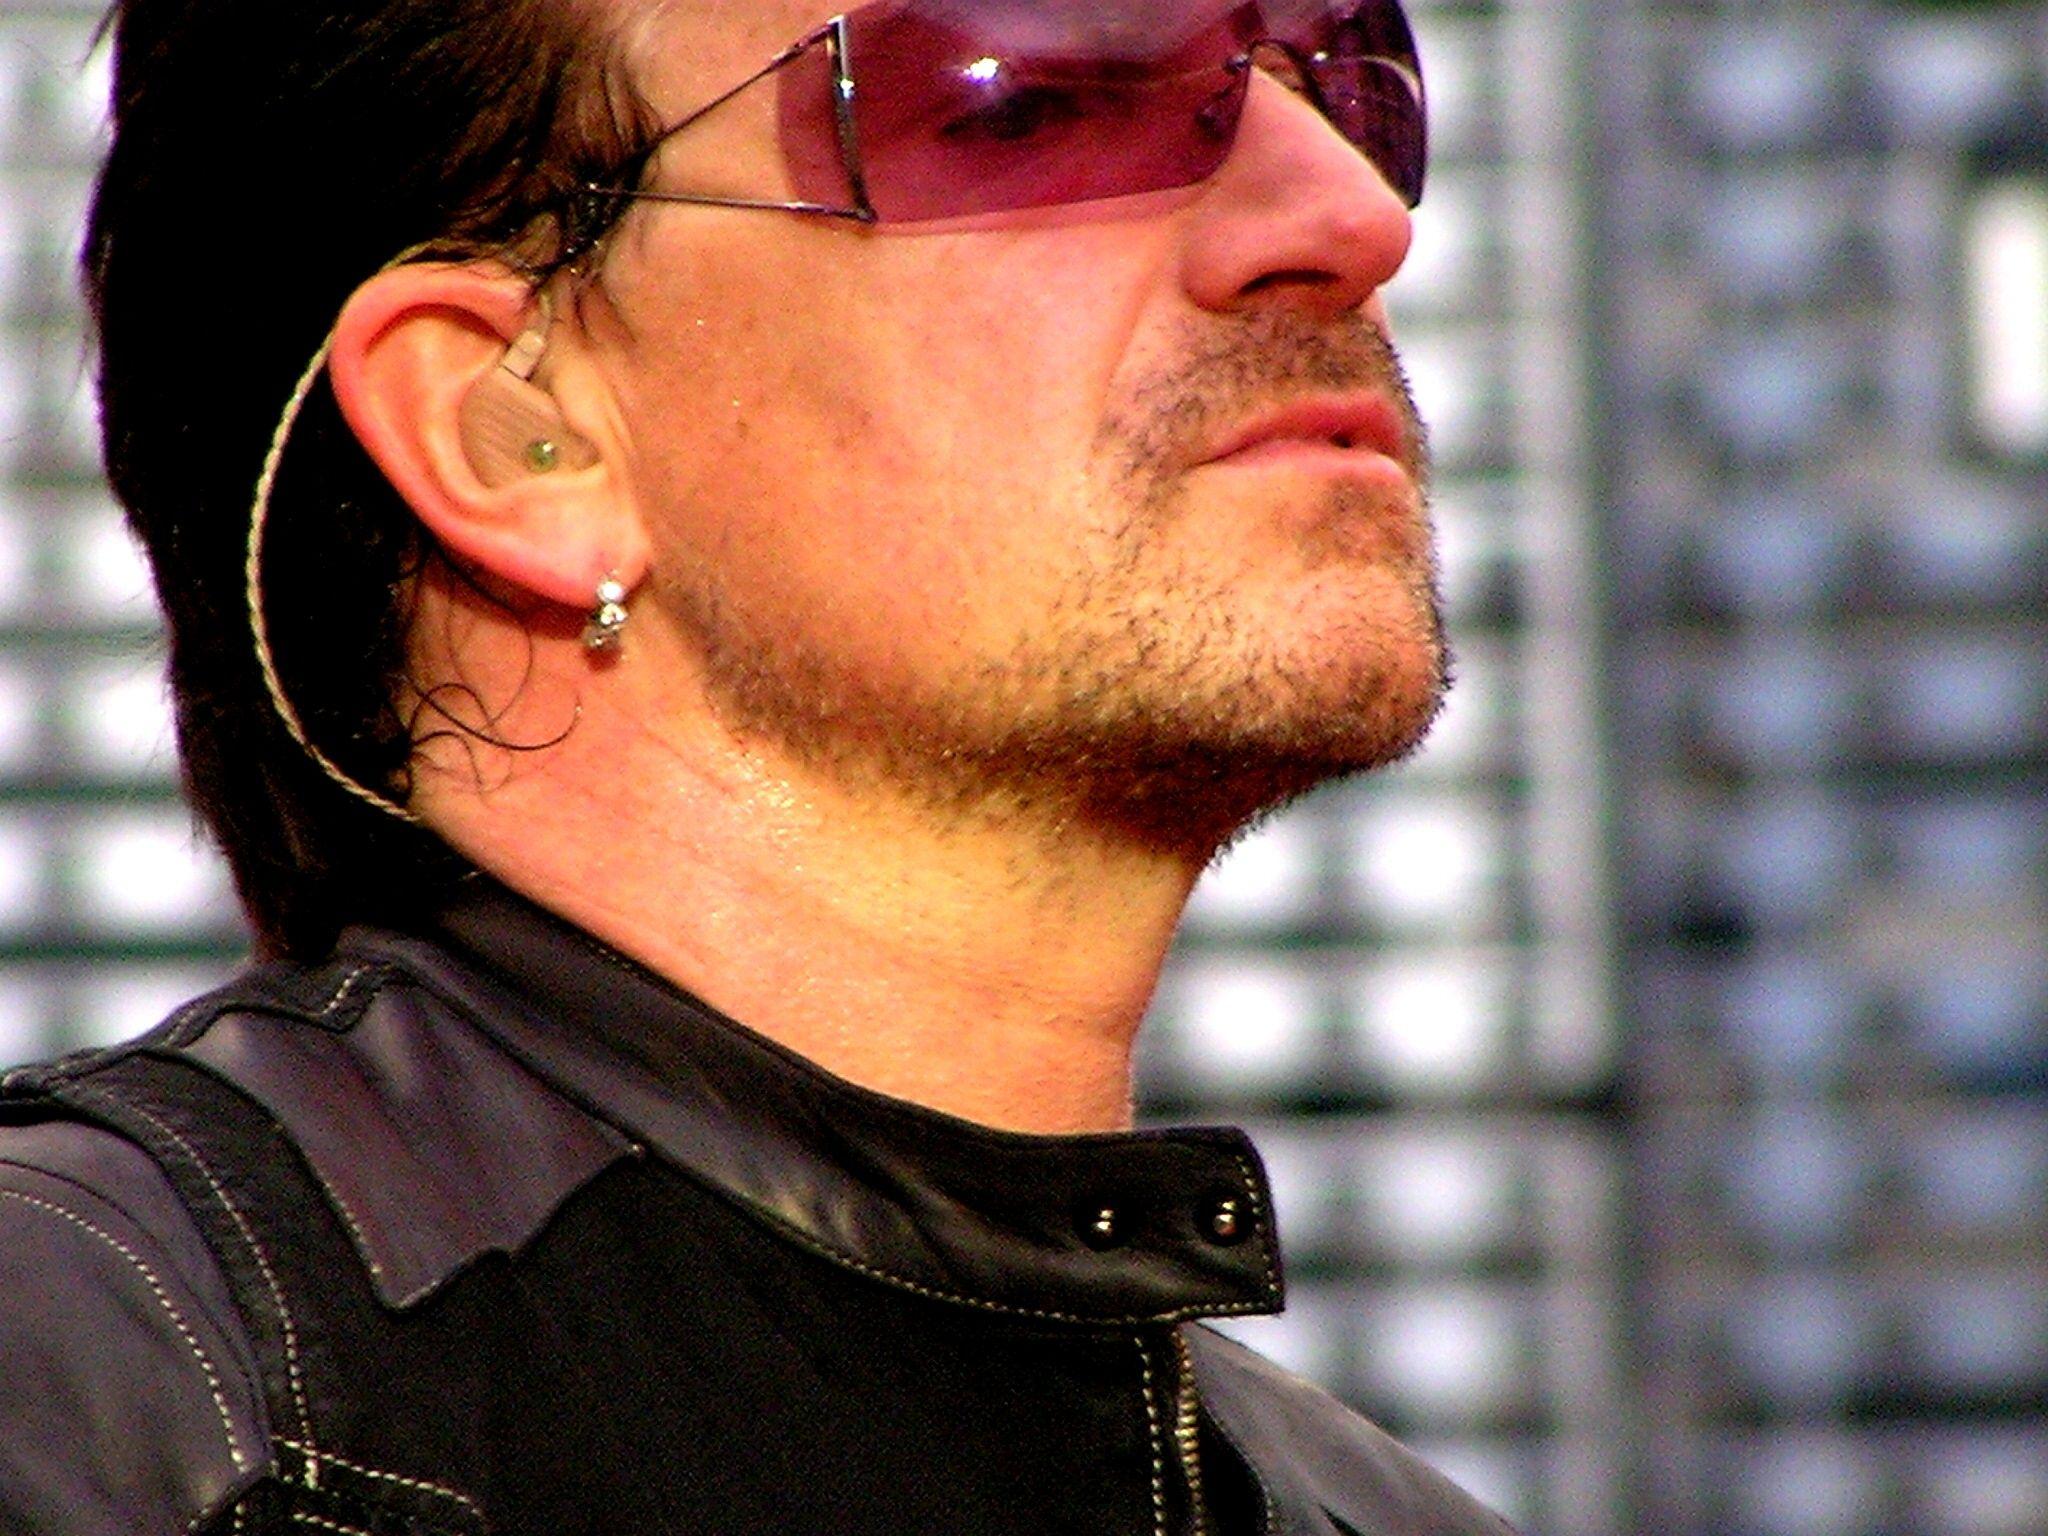 Bono Breaks His Silence on Why He Wears His Trademark Sunglasses